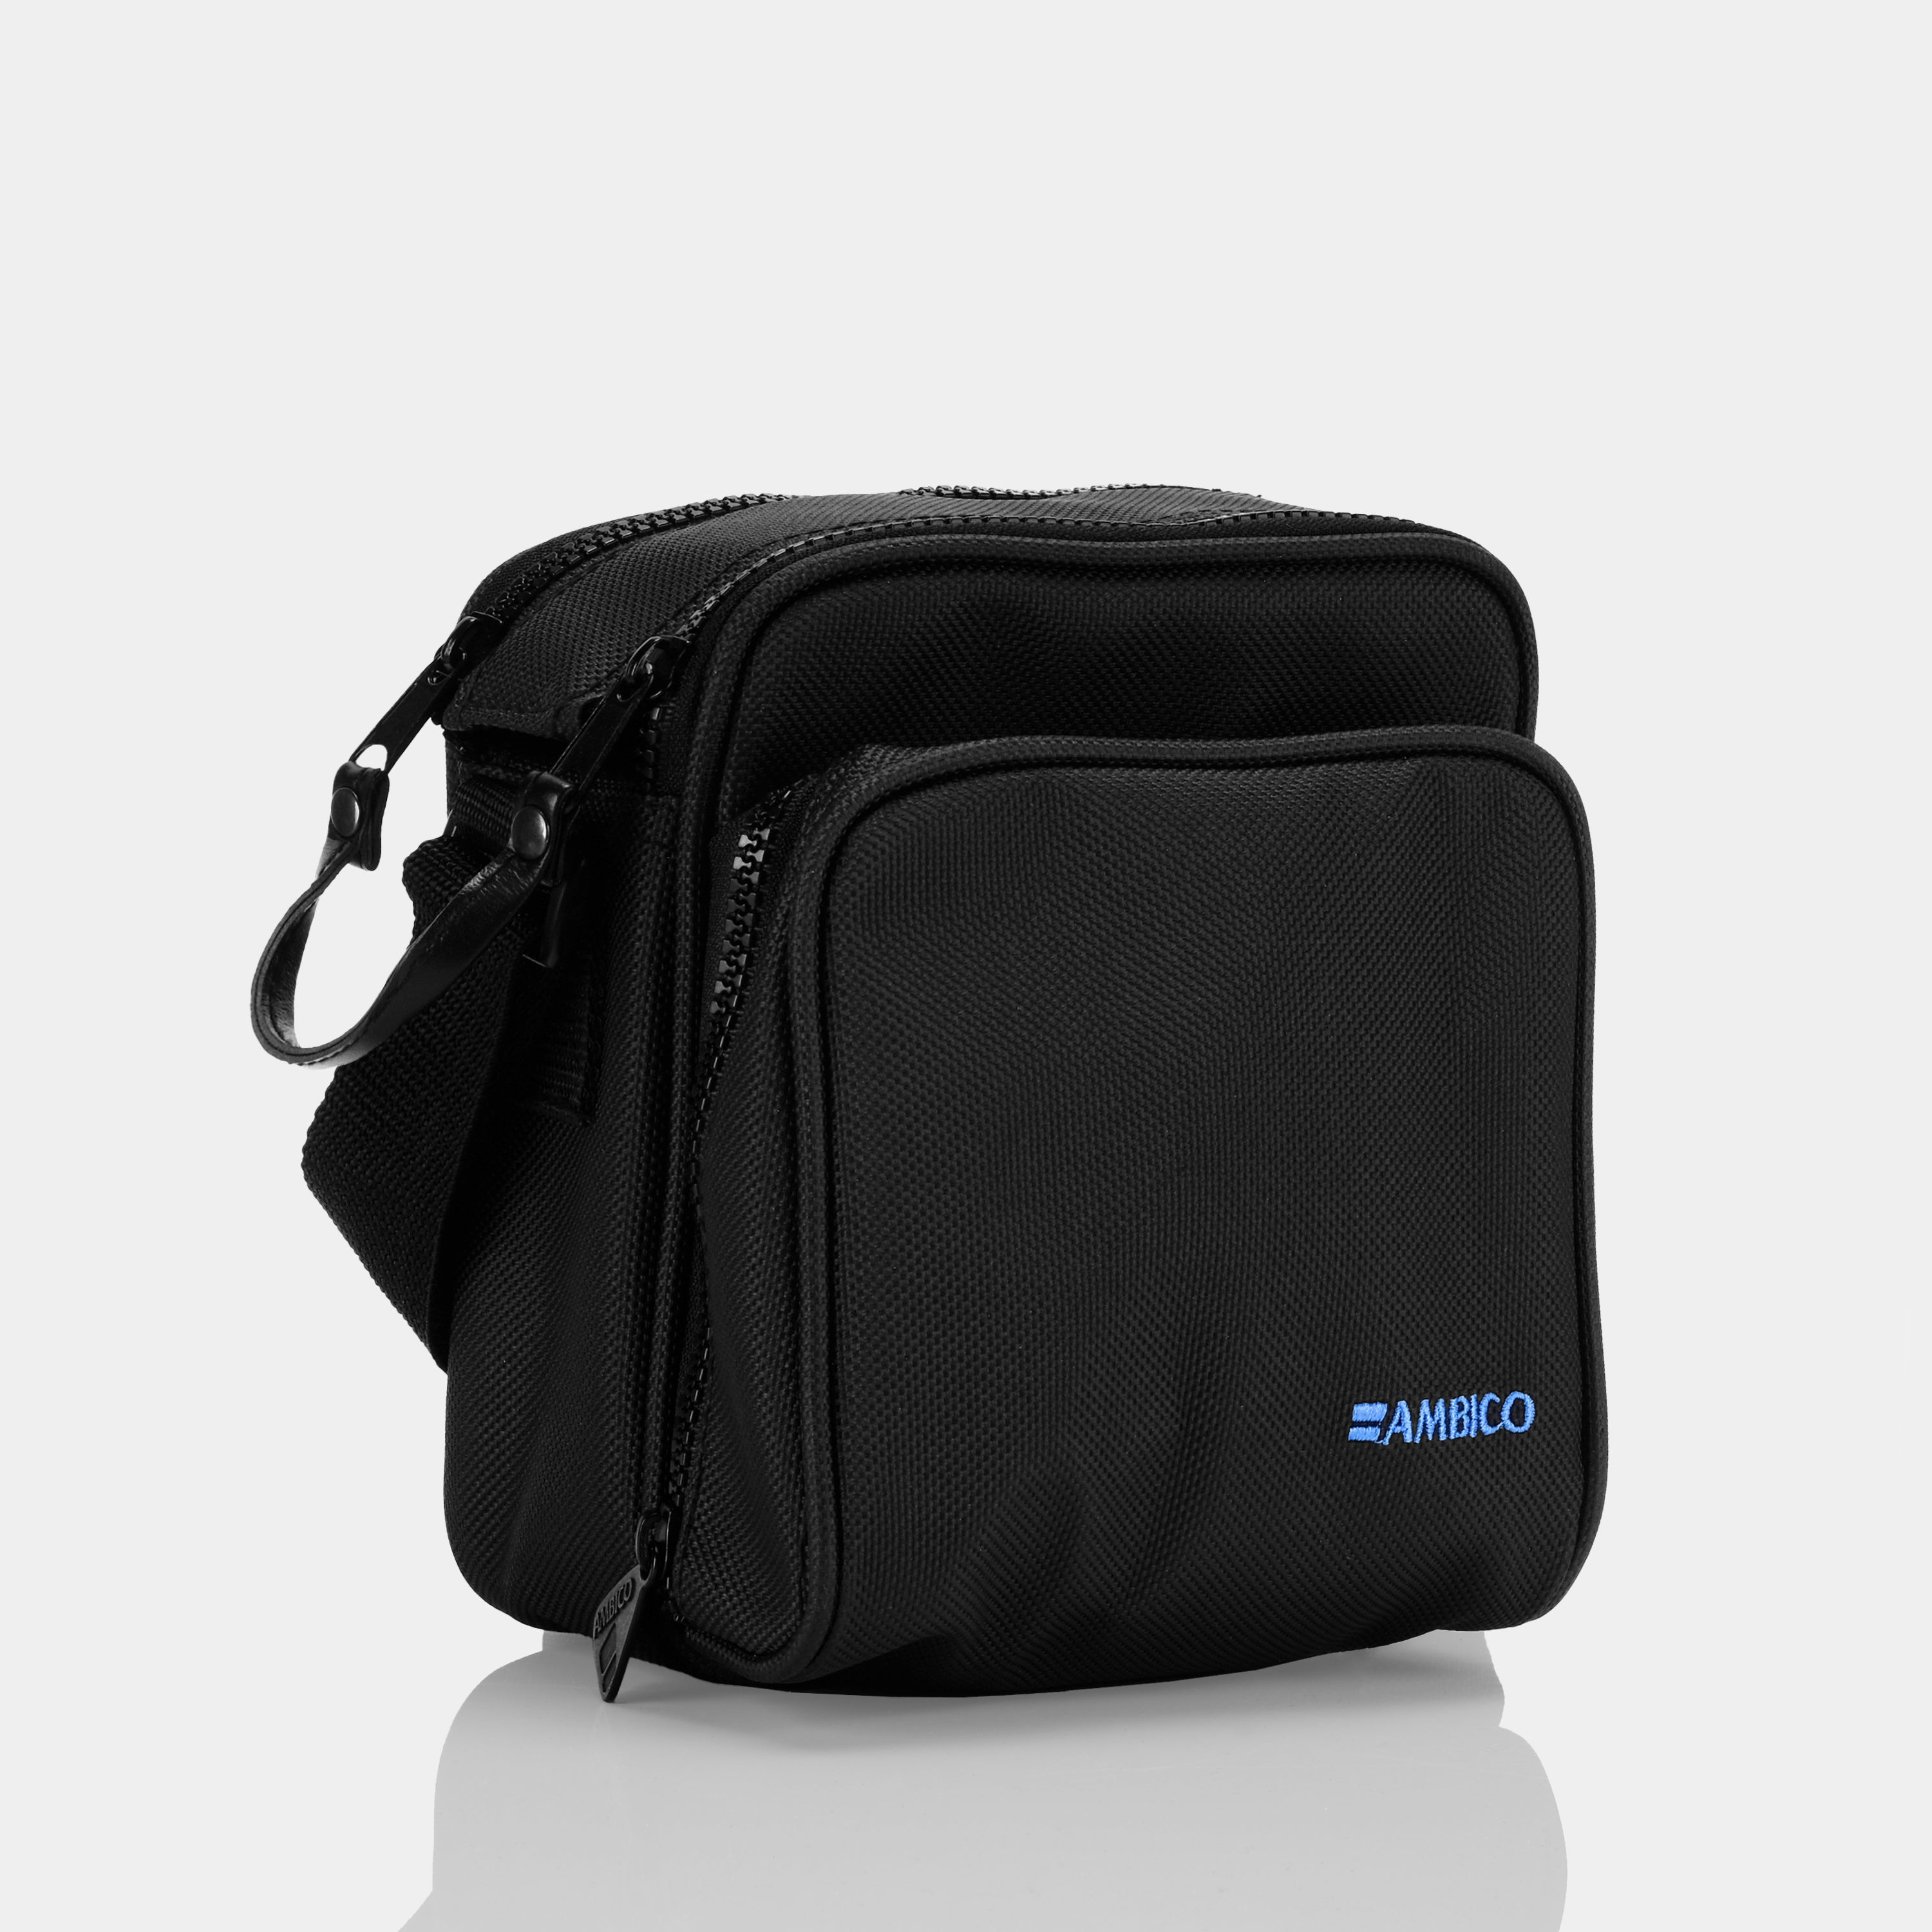 Ambico Black Instant Camera Bag